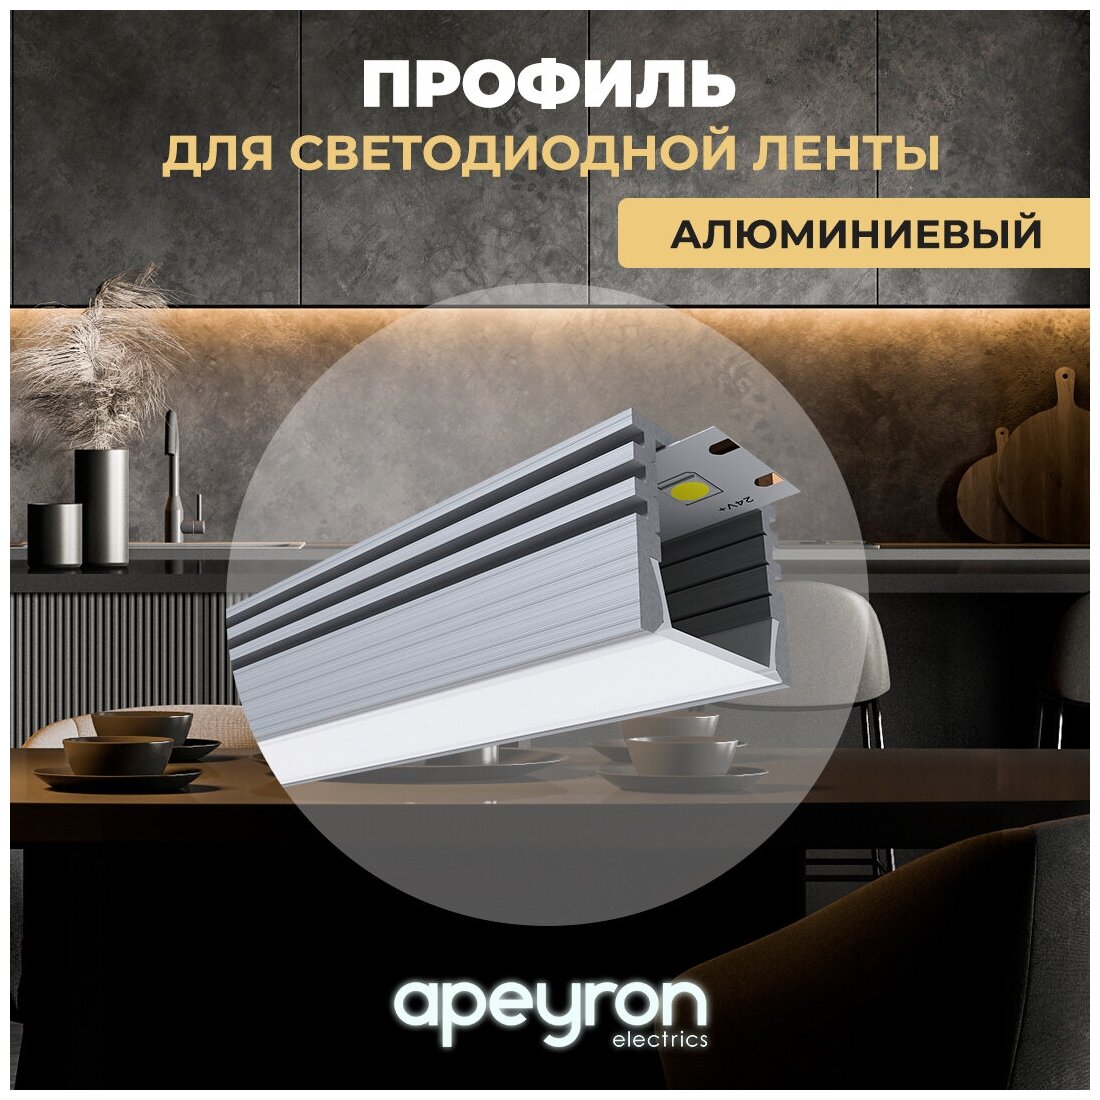 Apeyron Electrics 08-09